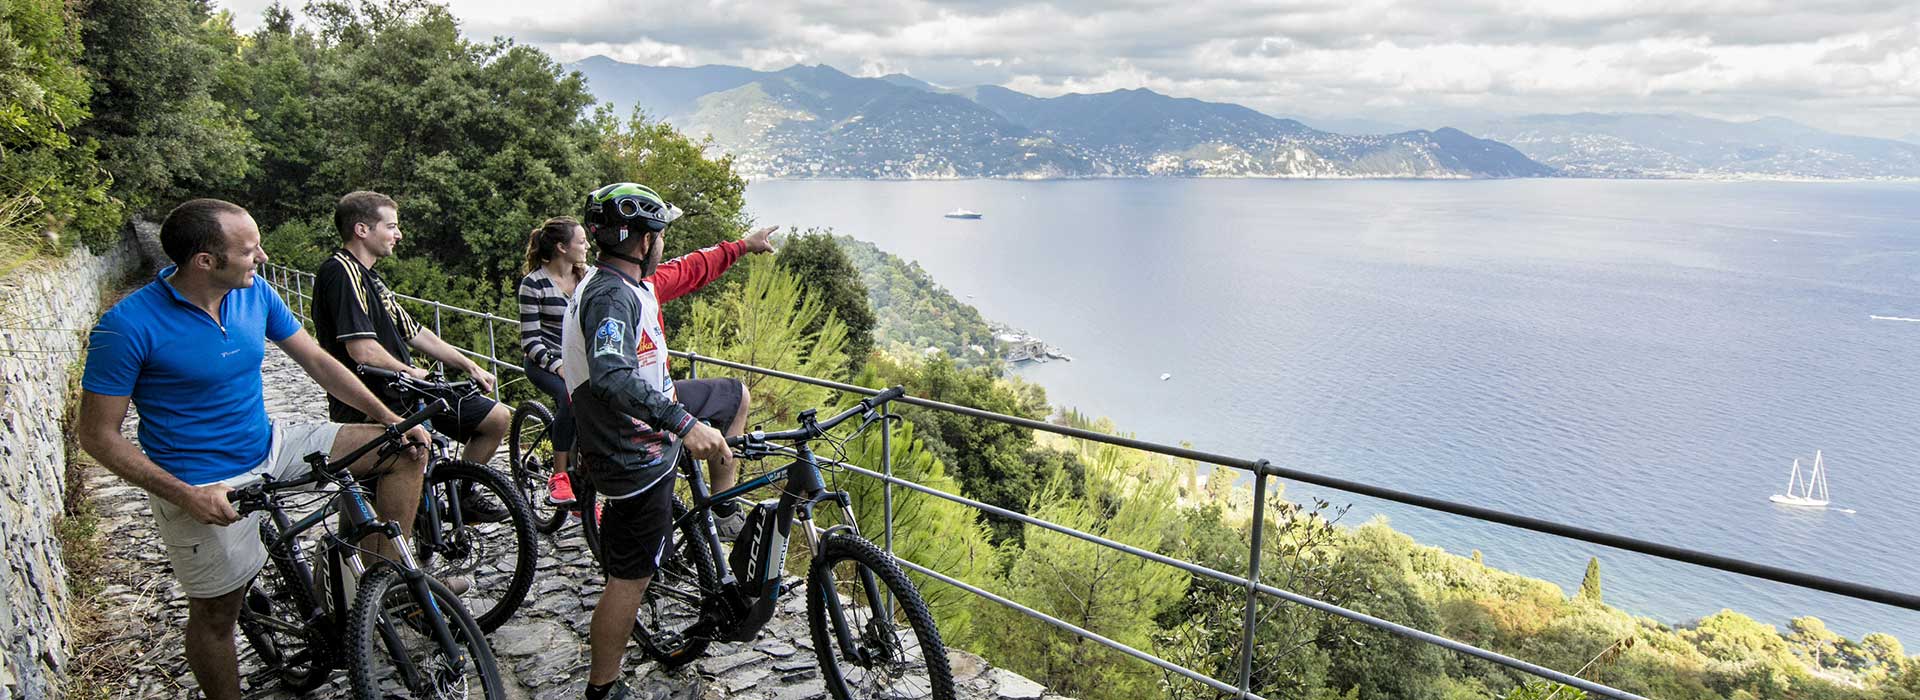 ebike 5 terre liguria italy hiking trekking portofino levanto e-bike bike francesco carocci tours